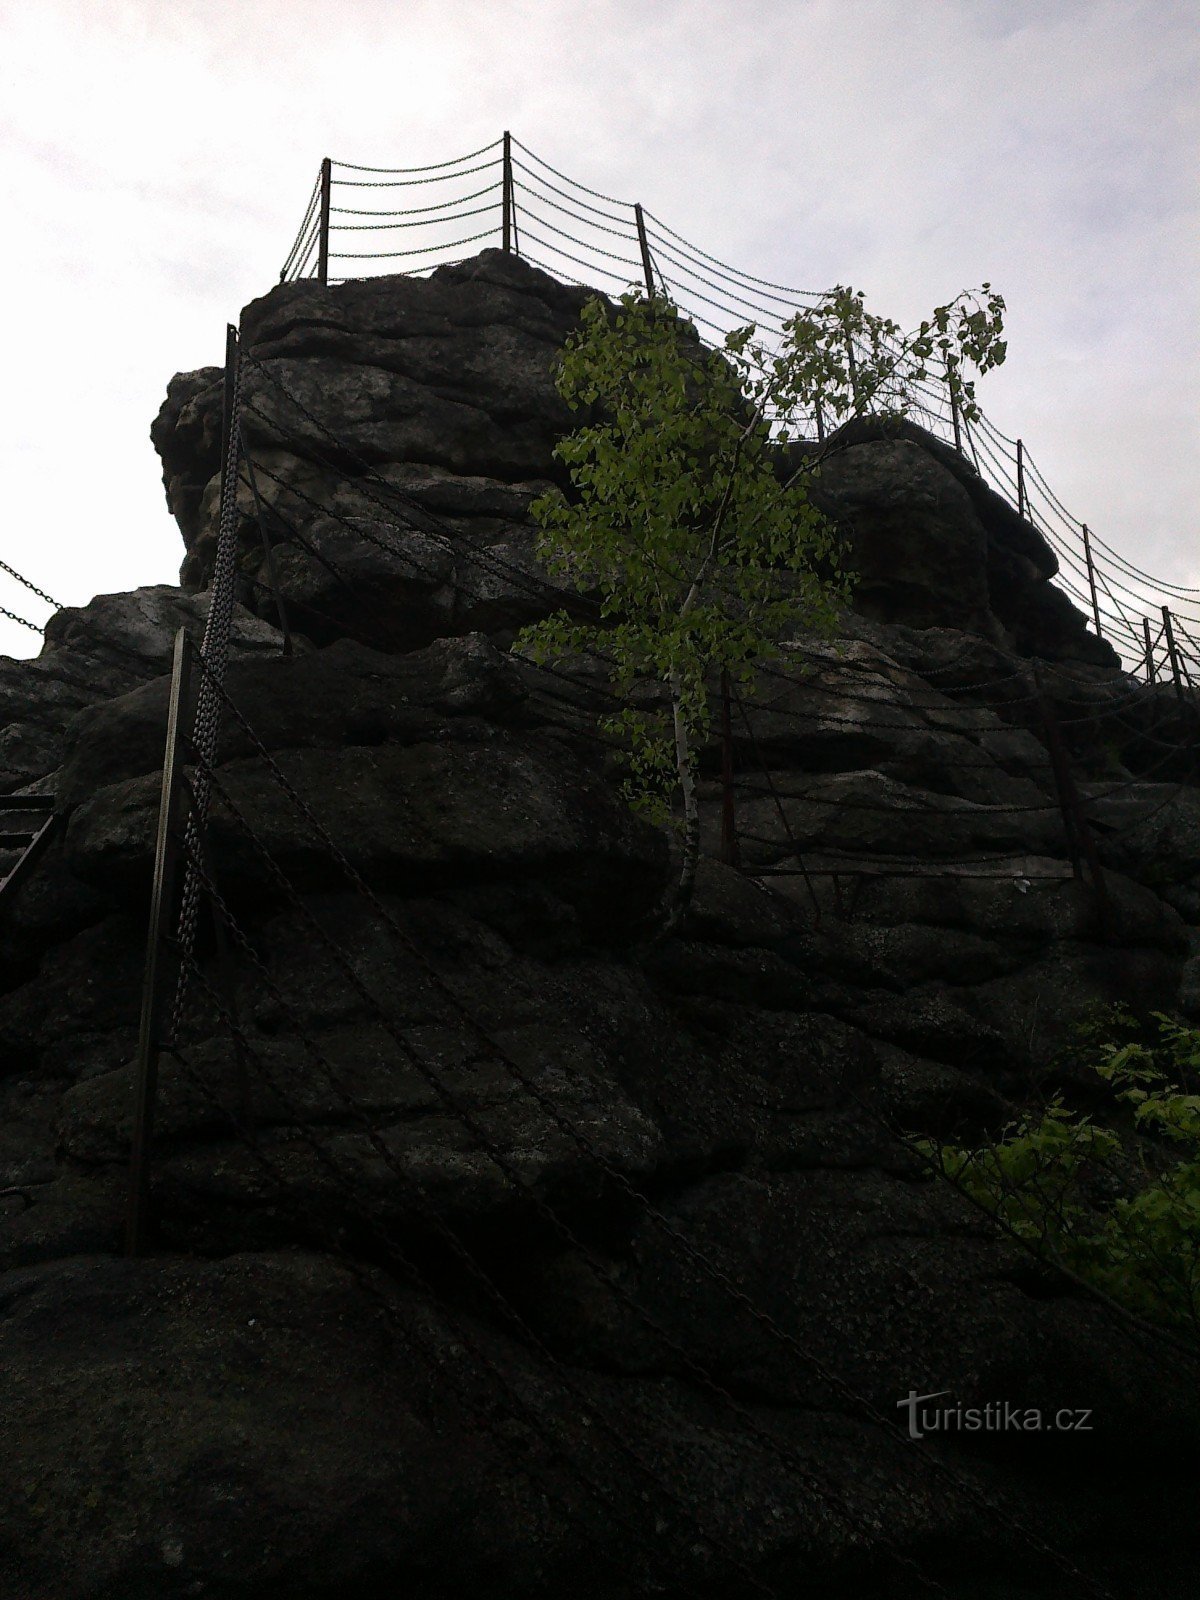 Devil's stones - παρατηρητήριο βράχου κοντά στο Jeseník.